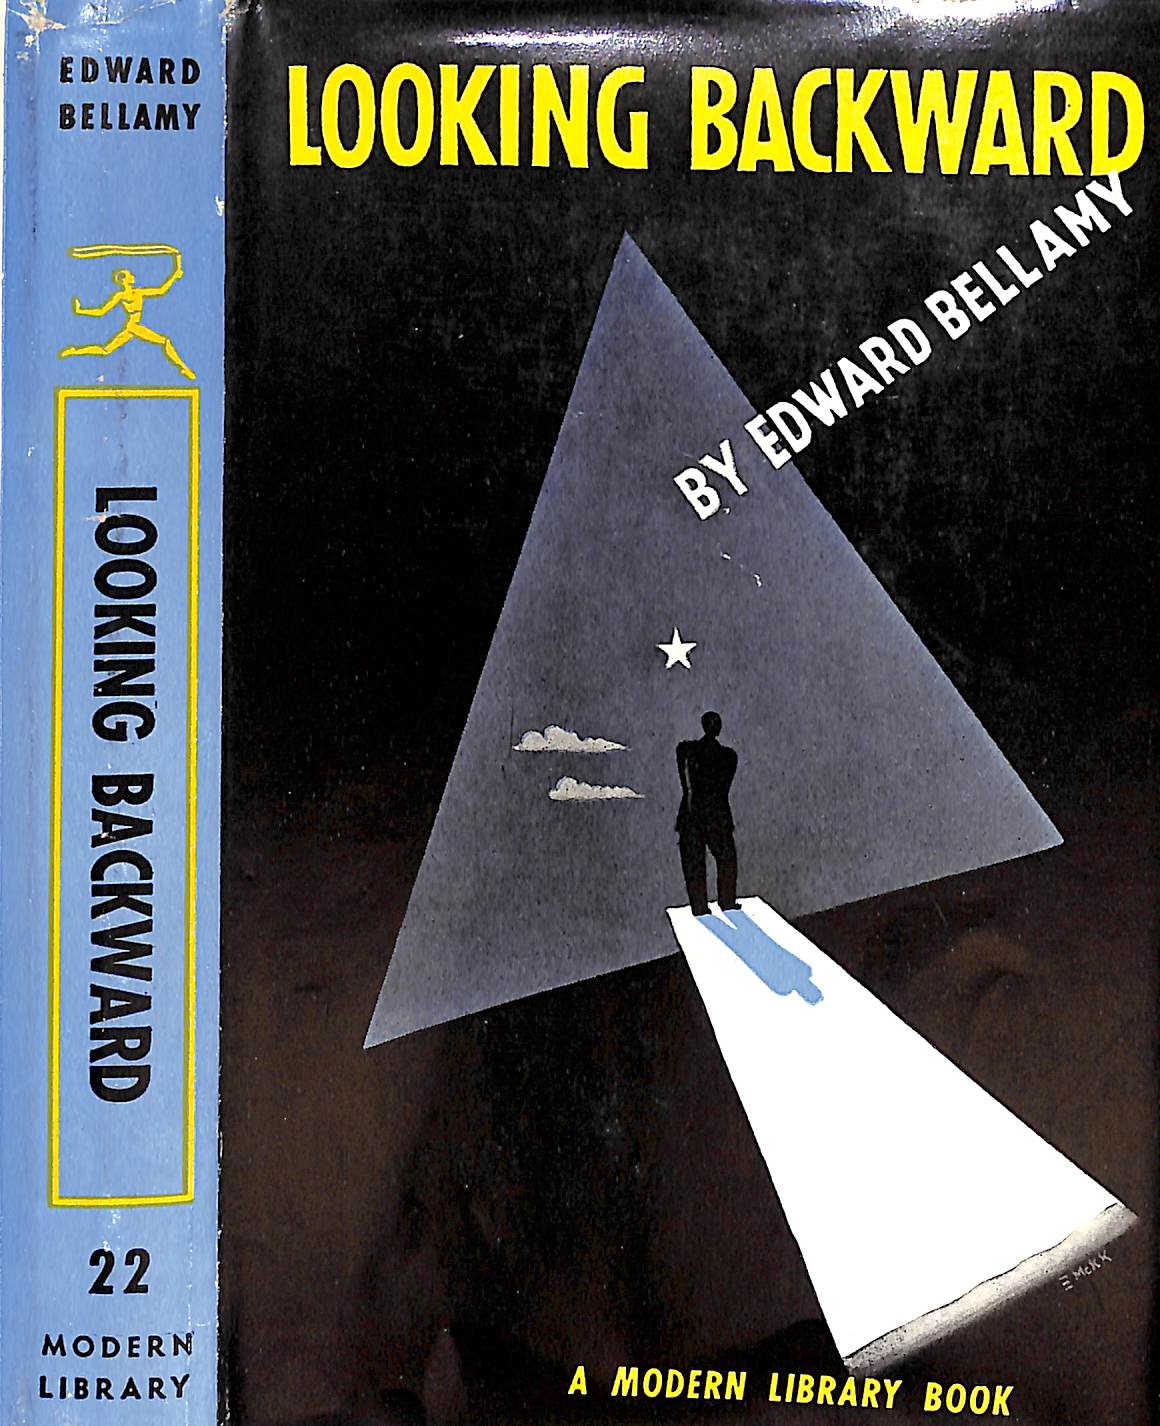 "Looking Backward 2000-1887" 1951 BELLAMY, Edward